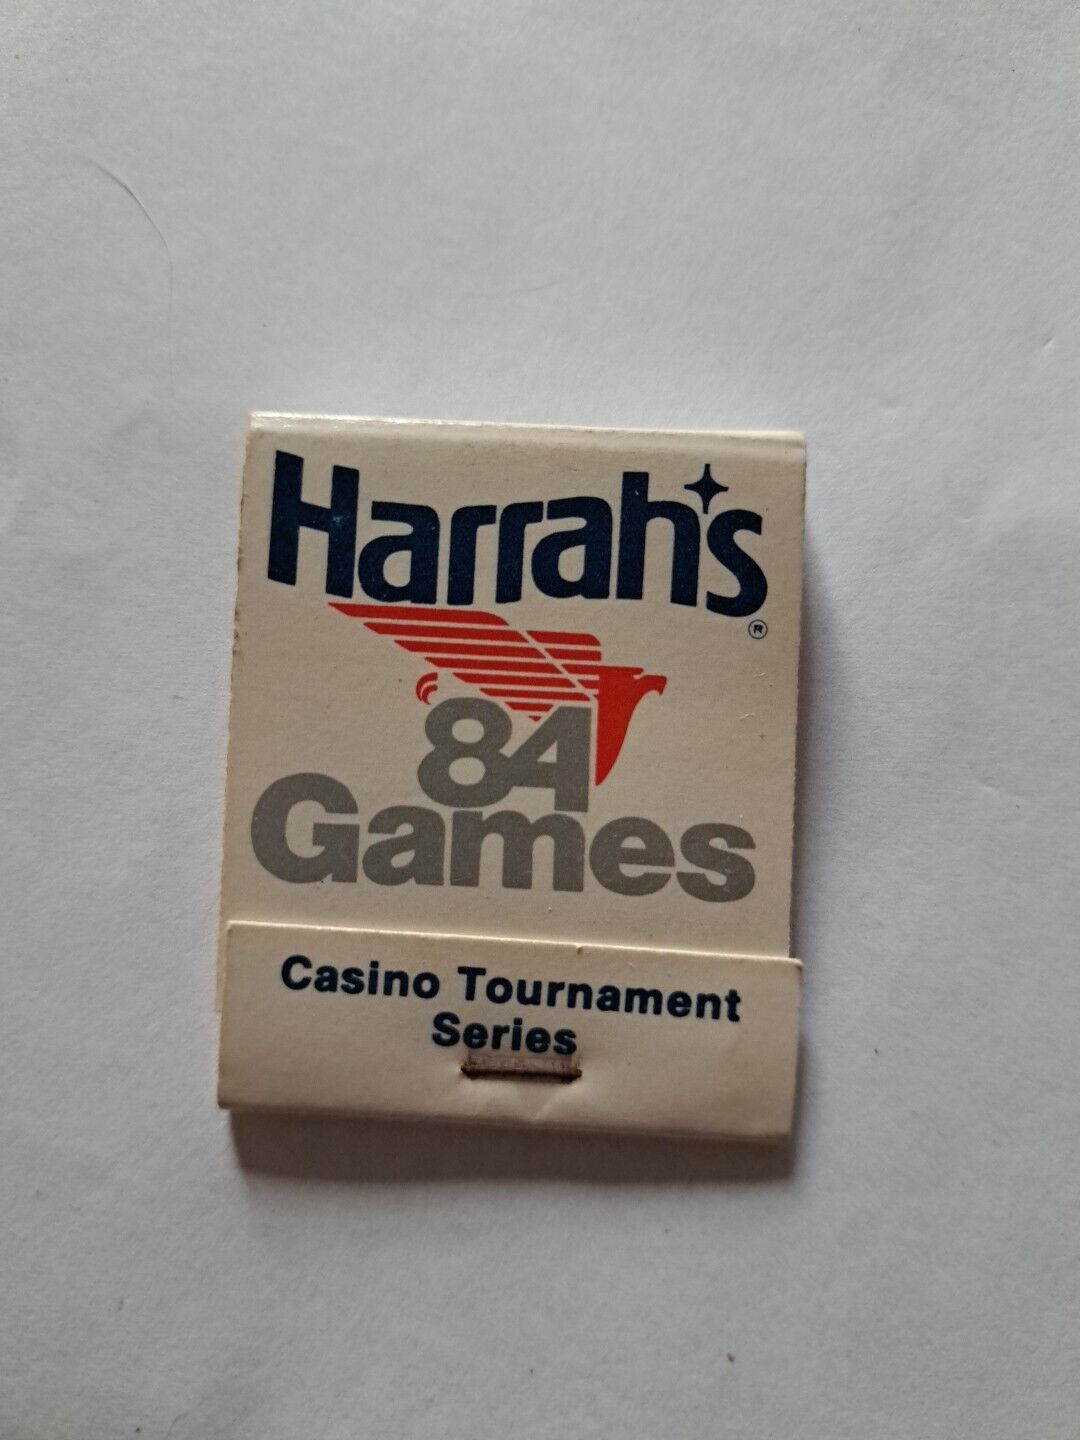 Harrahs 84 Games Casino Tournament Matchbook Vintage Matches Reno Vegas